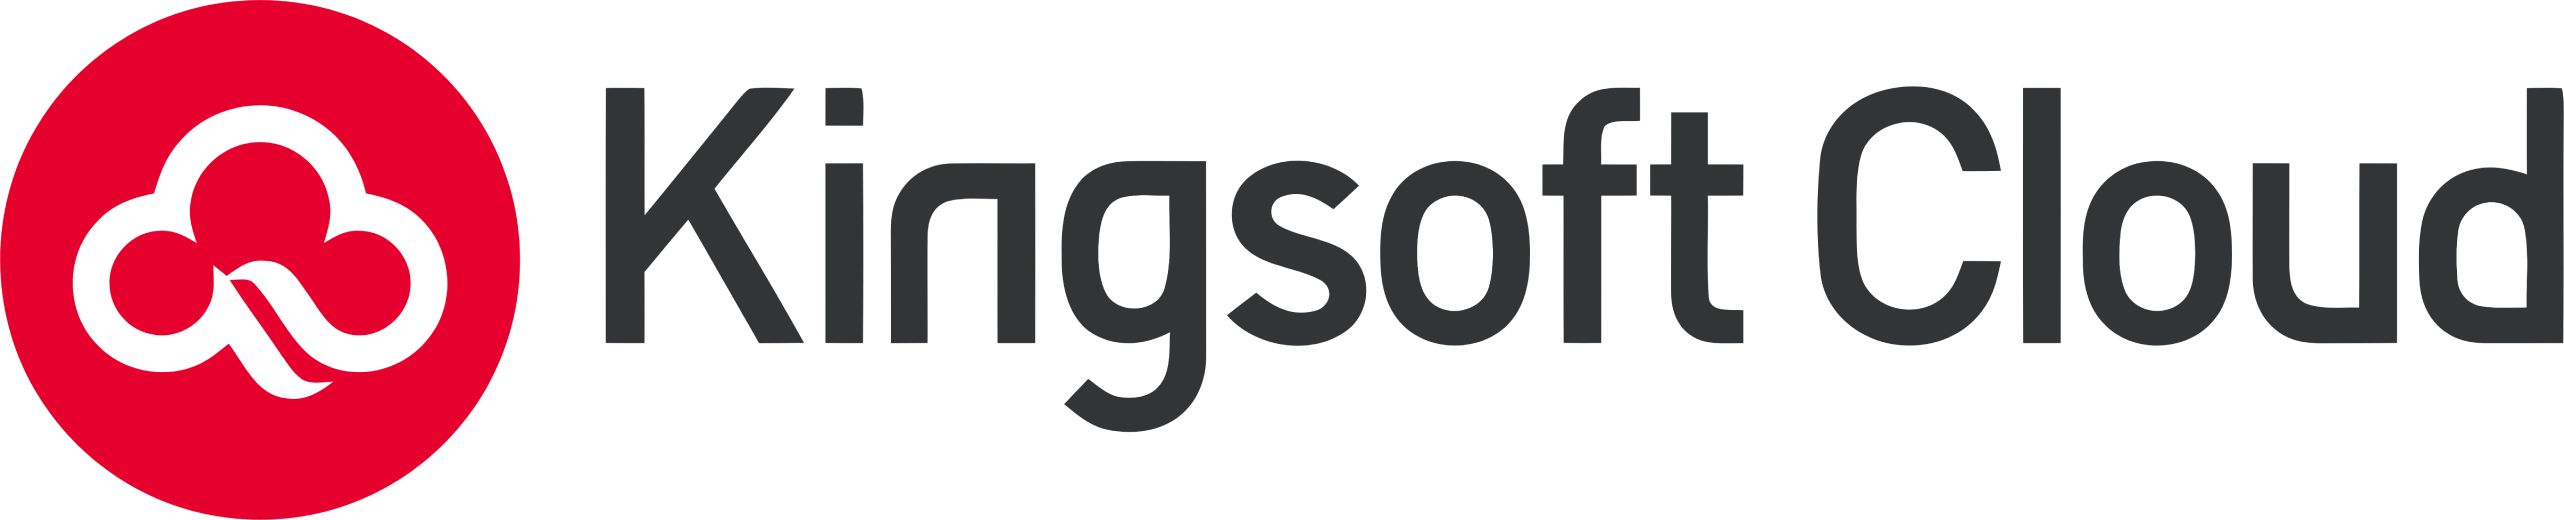 Kingsoft Cloud logo large (transparent PNG)